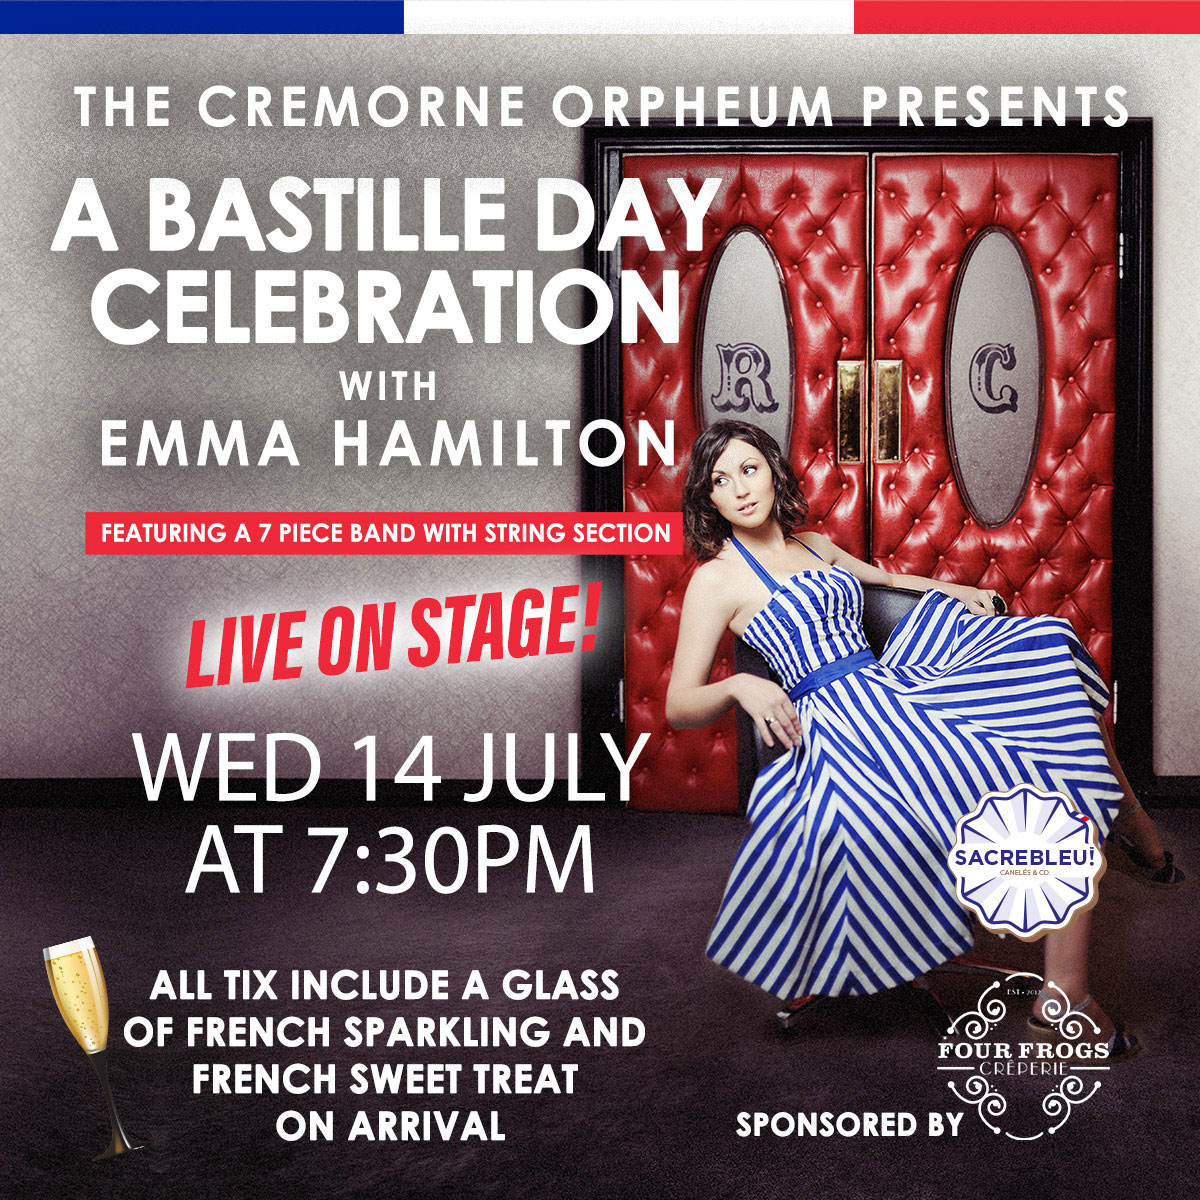 Bastille Day Celebration with Emma Hamilton at Cremorne Orpheum